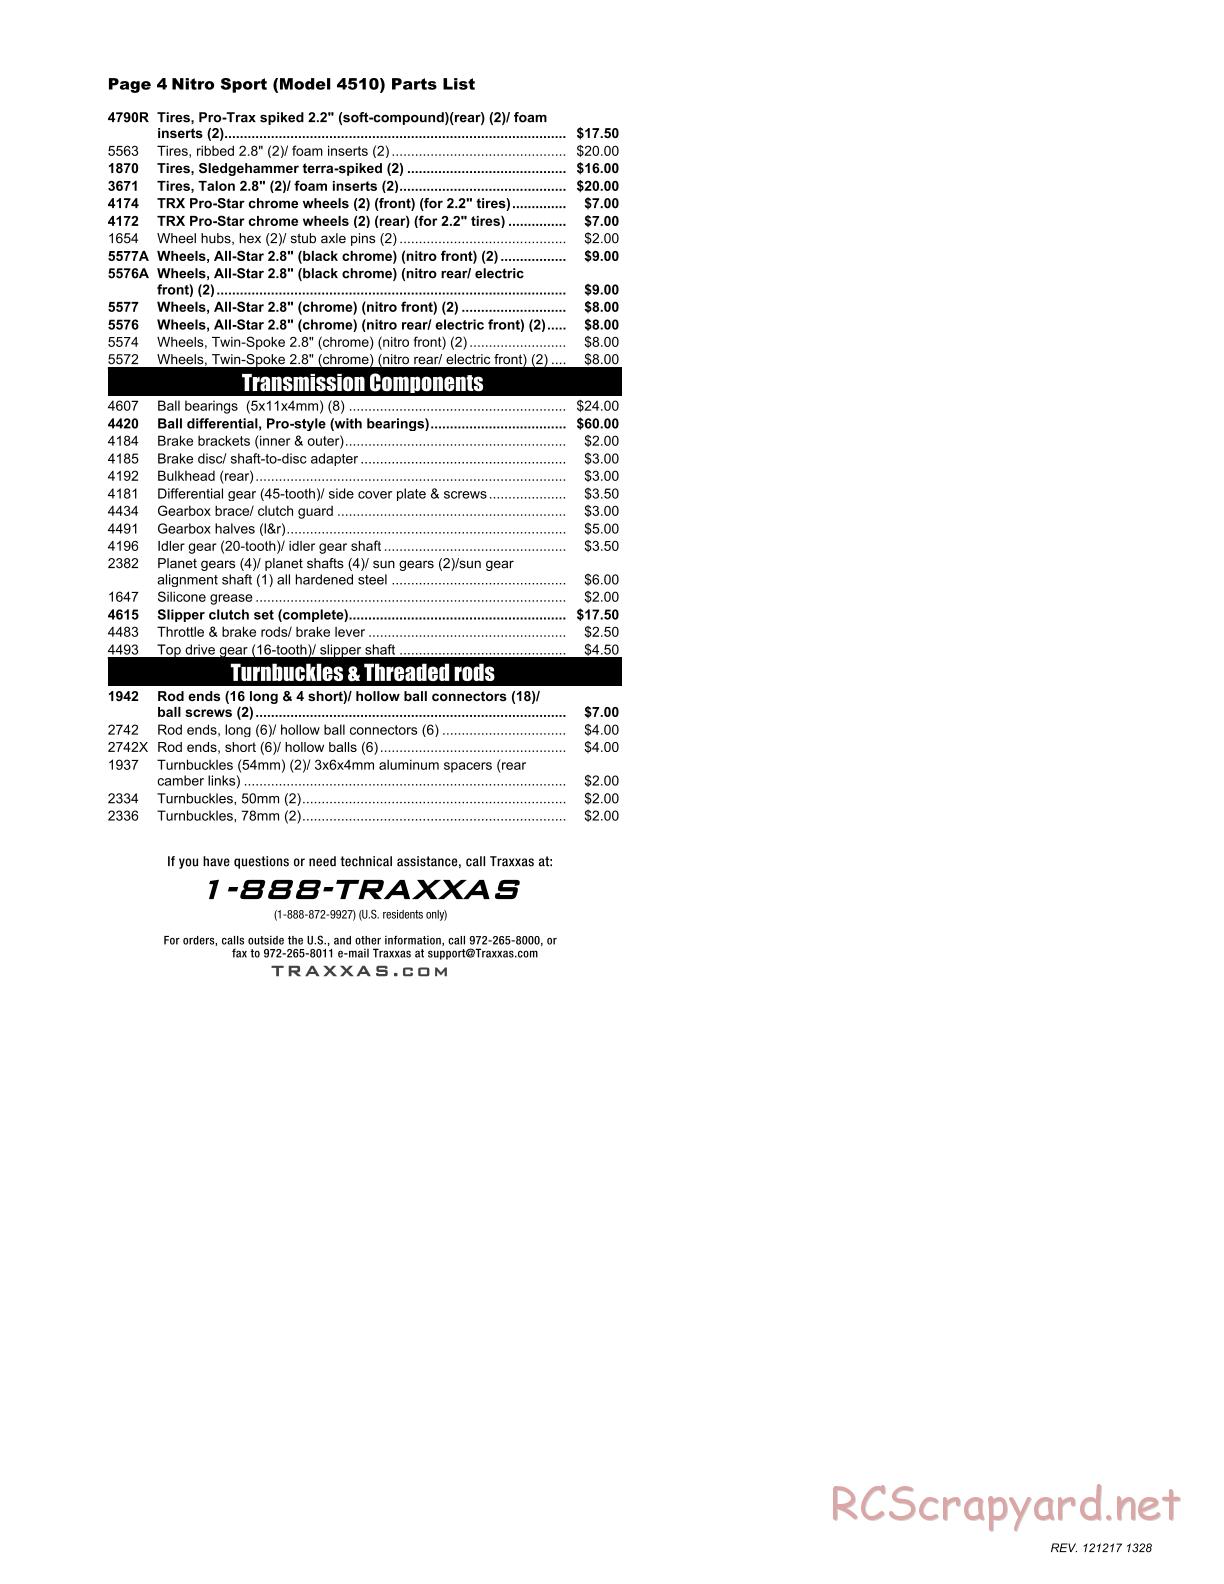 Traxxas - Nitro Sport - Parts List - Page 4